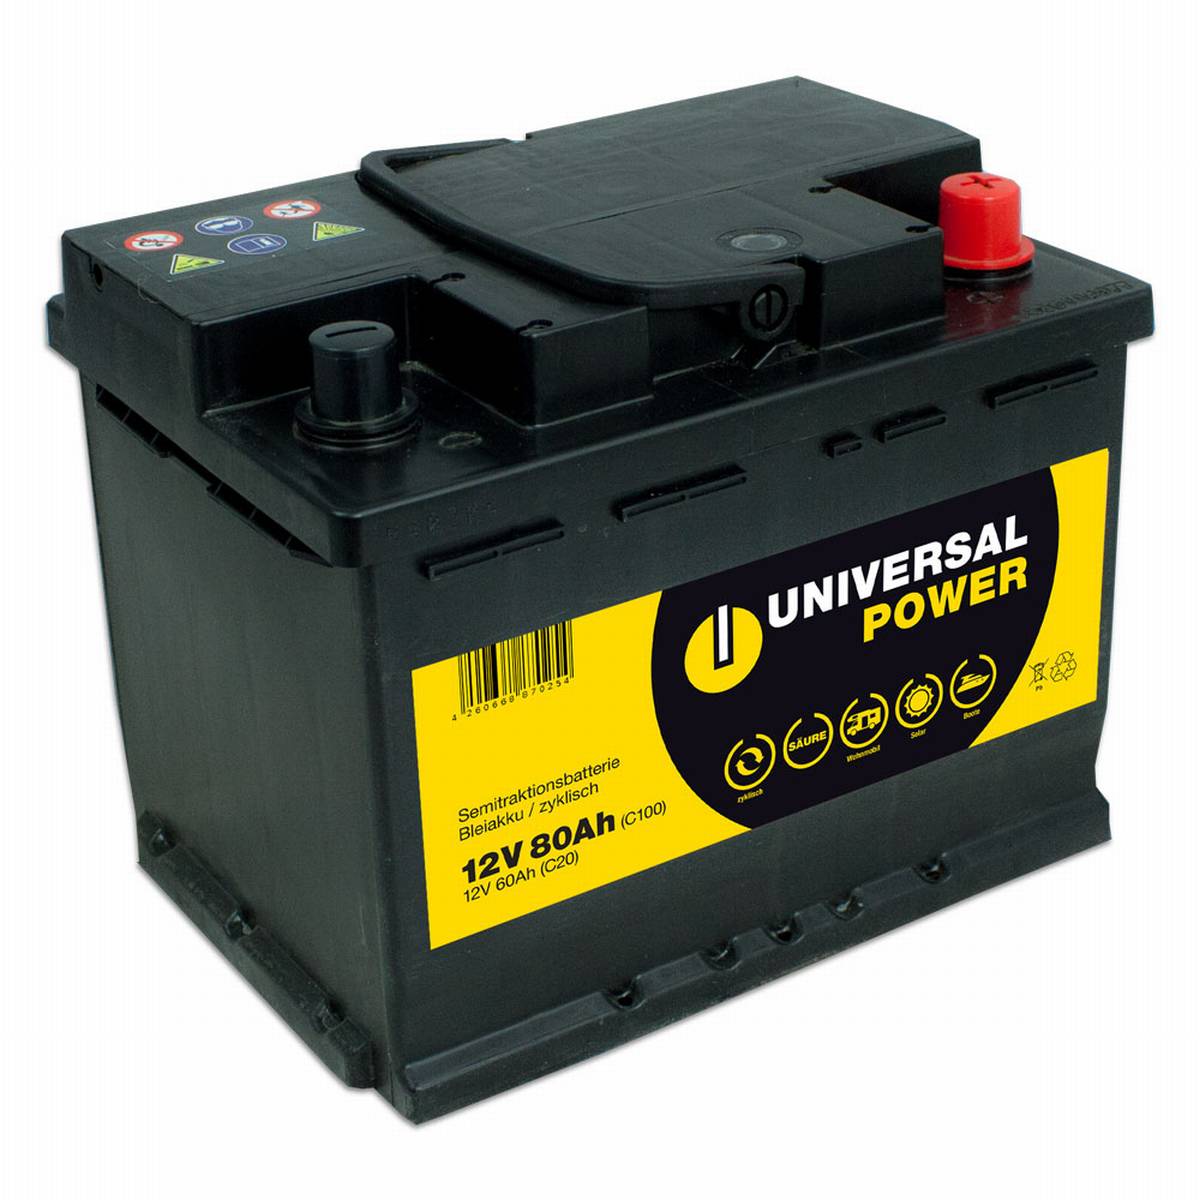 Universal Power 12-80 12V 80Ah (C100) Batteria per recinti da pascolo